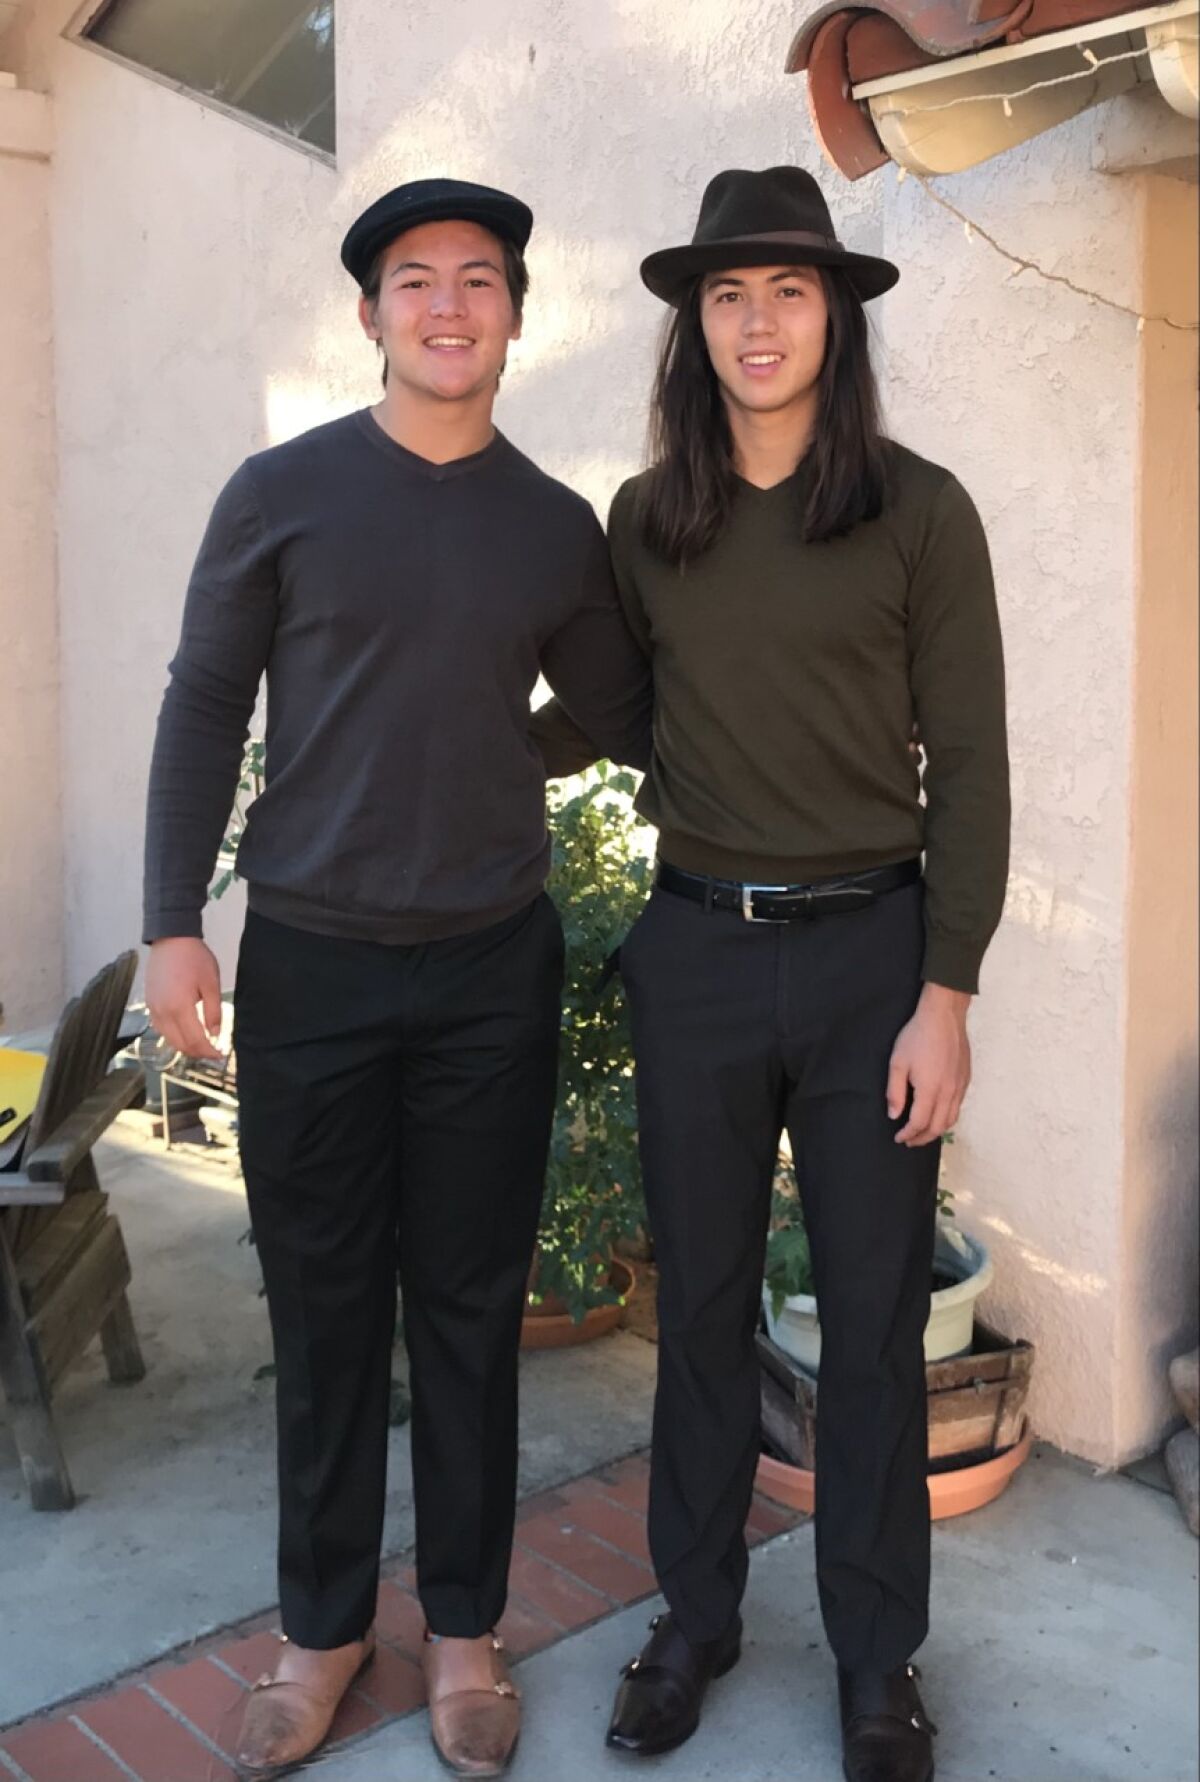 Freshman quarterback Bear Bachmeier (left) and junior receiver Tiger Bachmeier of Murrieta Valley pose for a photo.